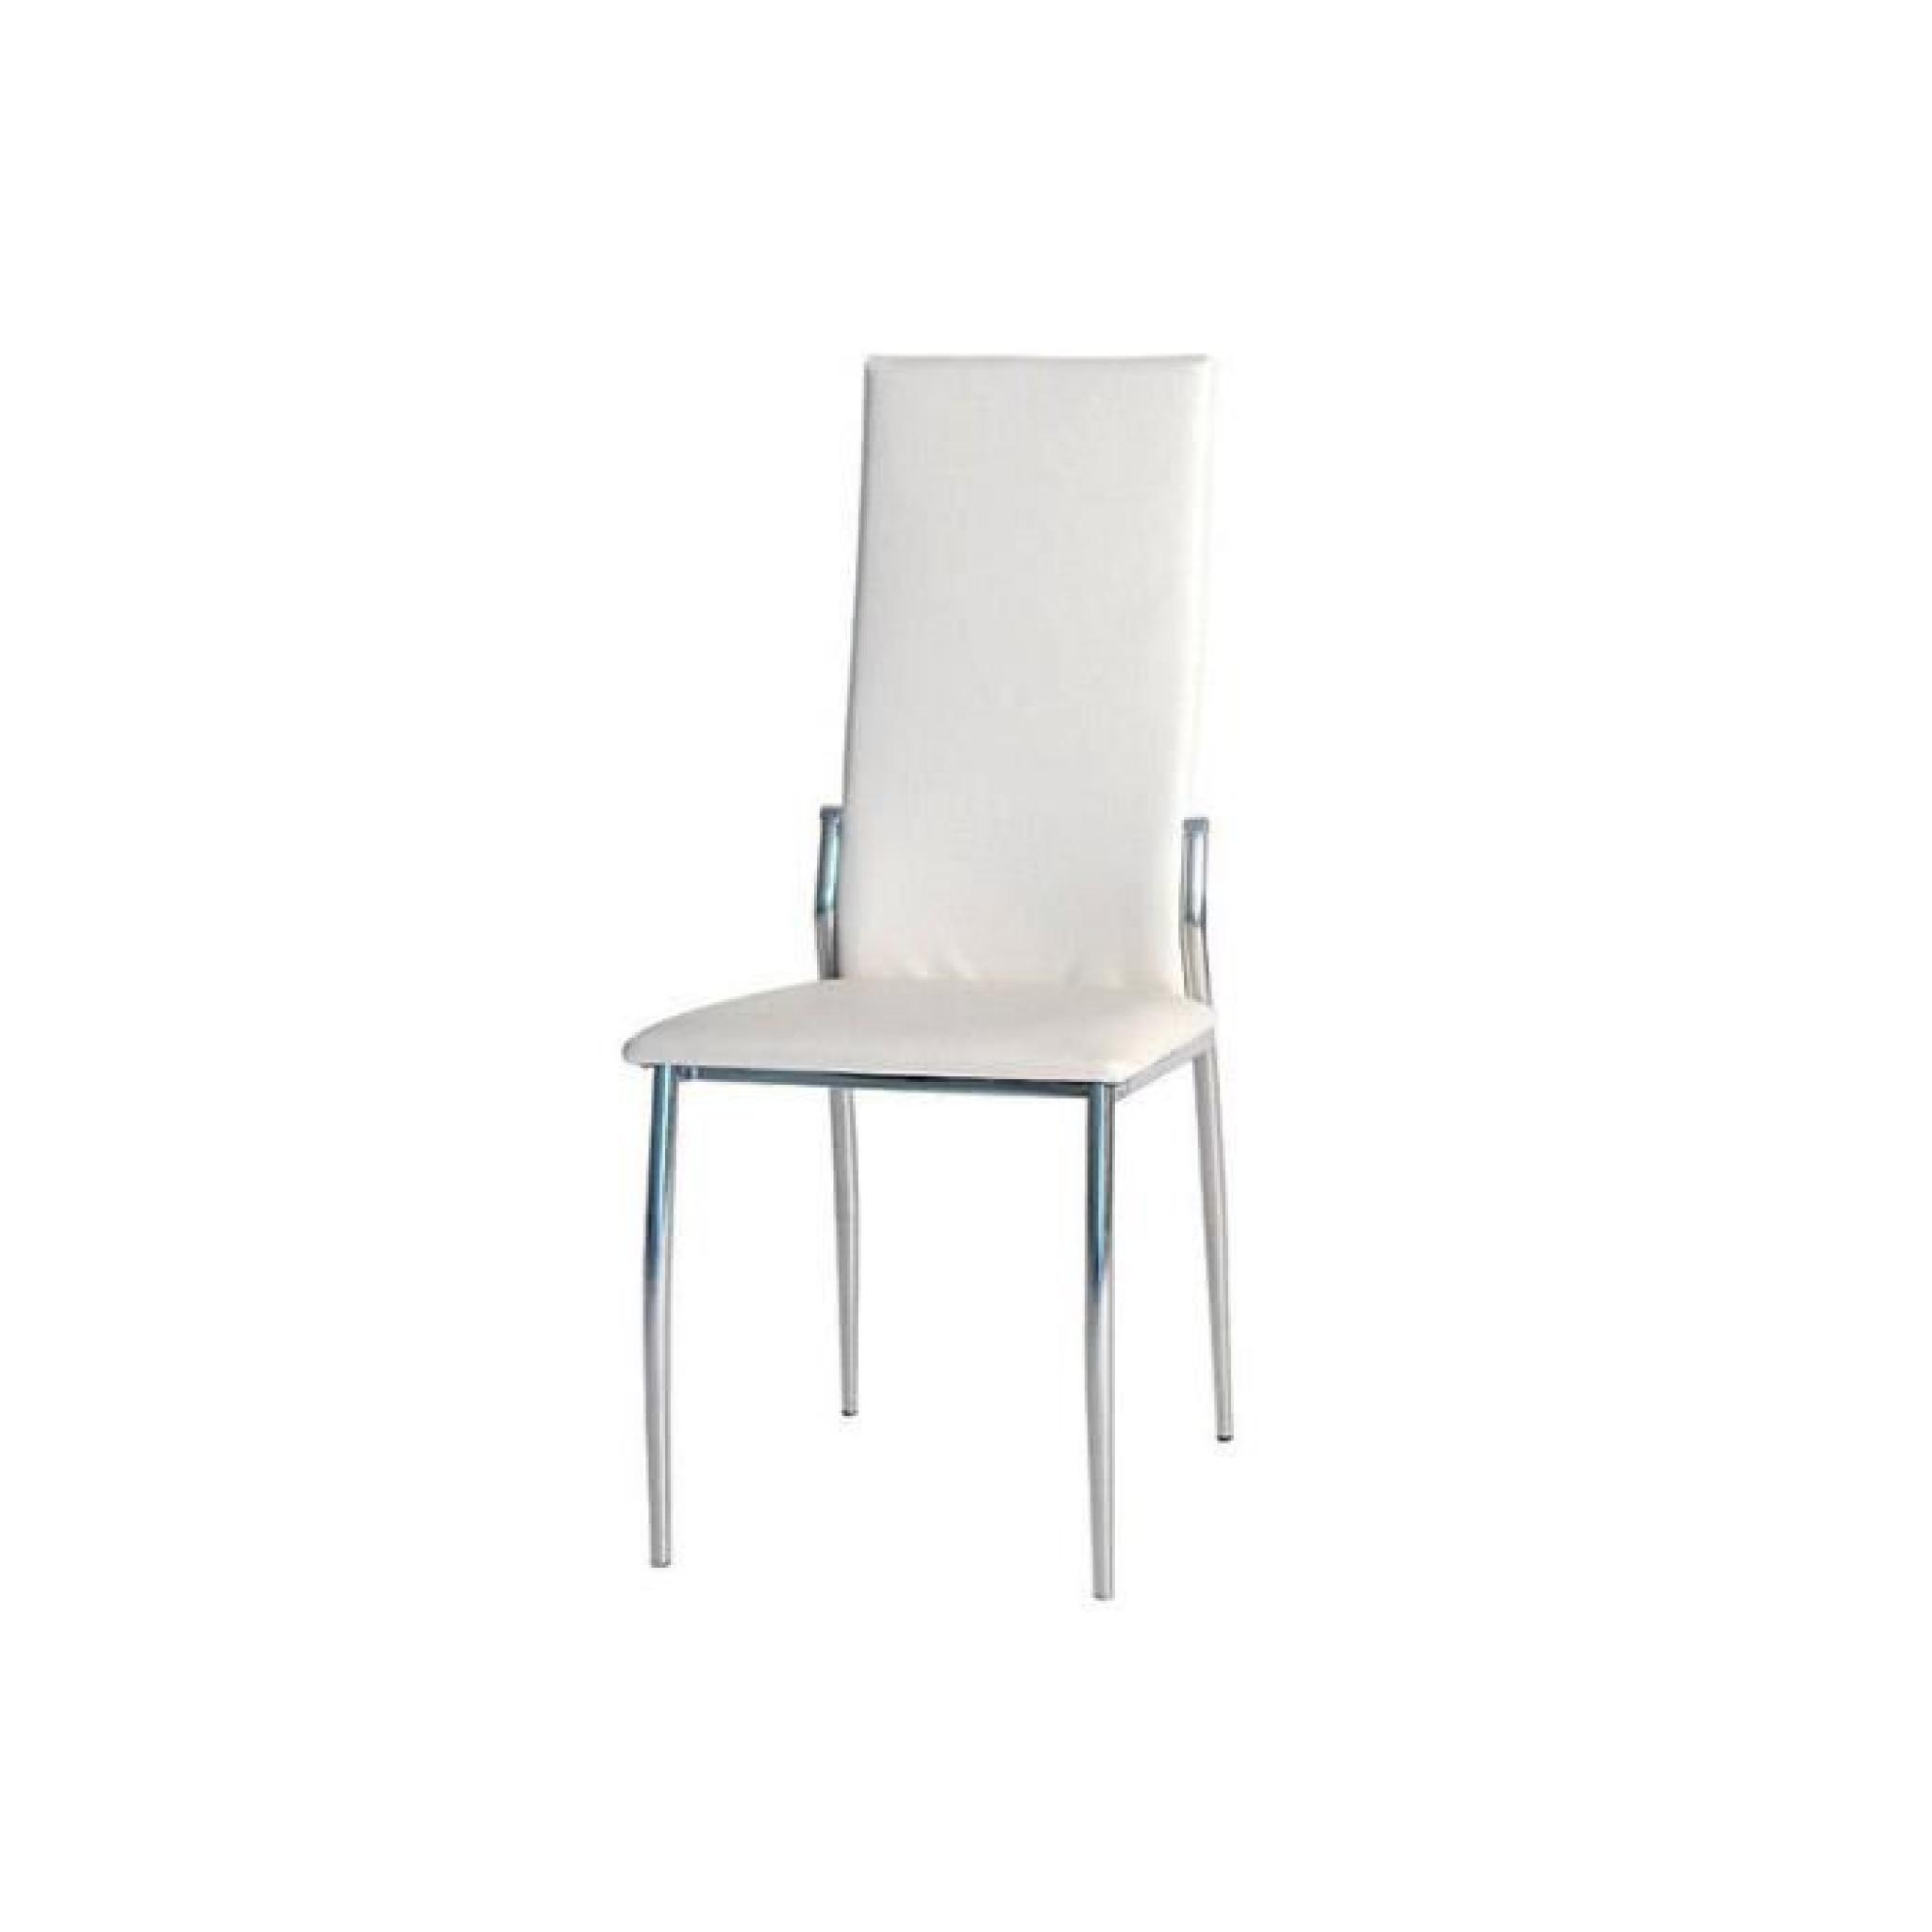 . 4 chaises blanches modernes Quadri PU.